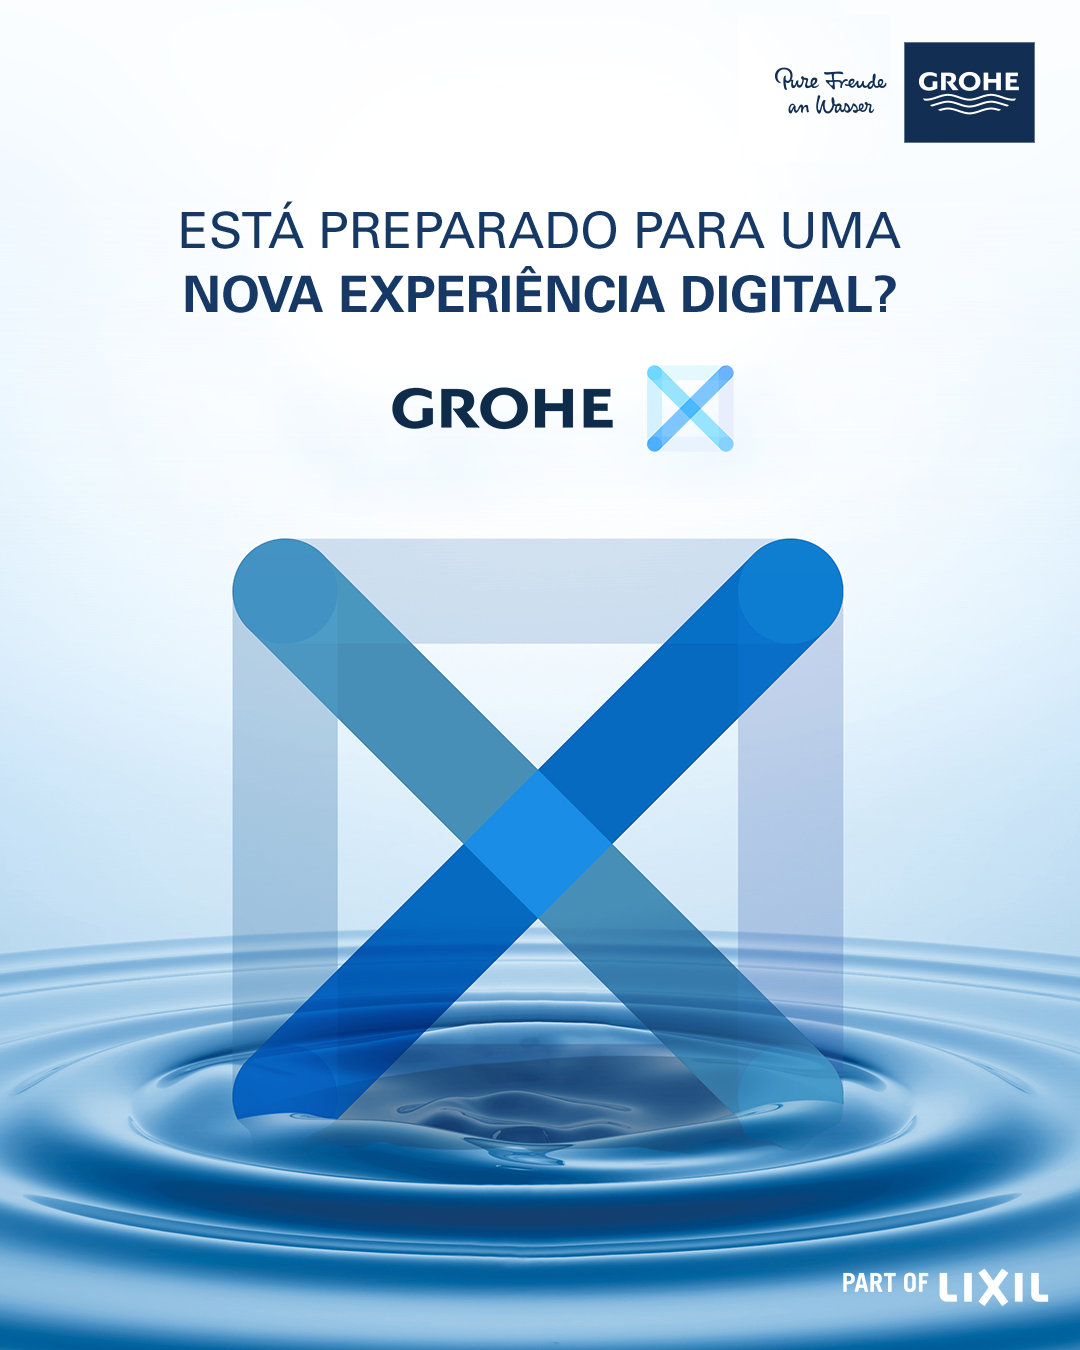 GROHE lança plataforma digital GROHE X